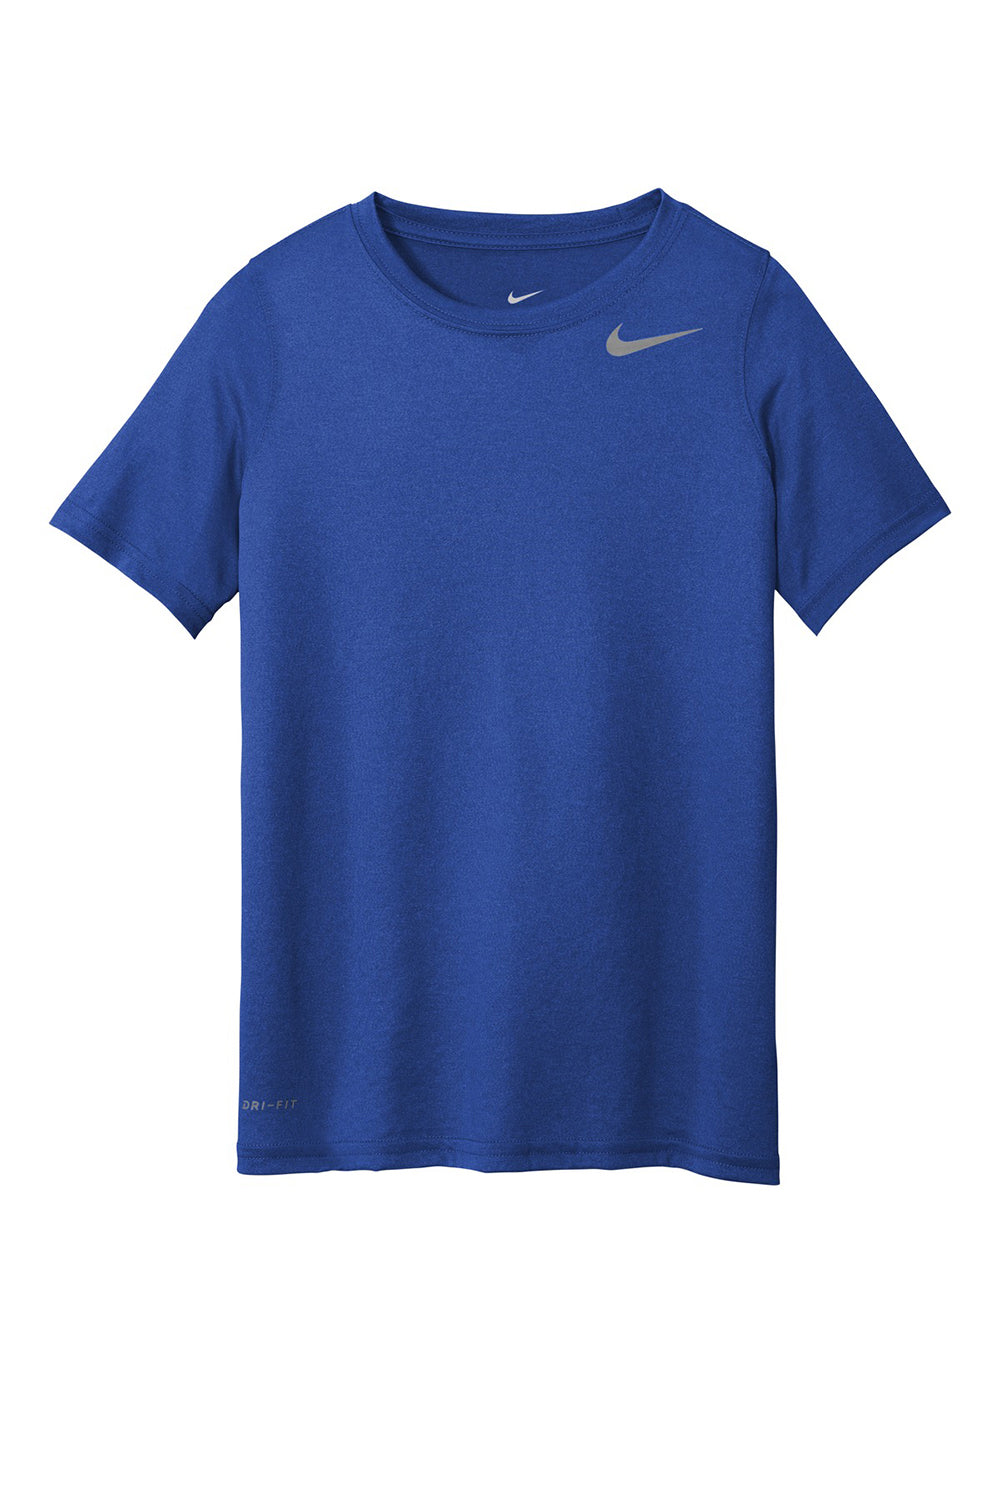 Nike 840178 Youth Legend Dri-Fit Moisture Wicking Short Sleeve Crewneck T-Shirt Game Royal Blue Flat Front